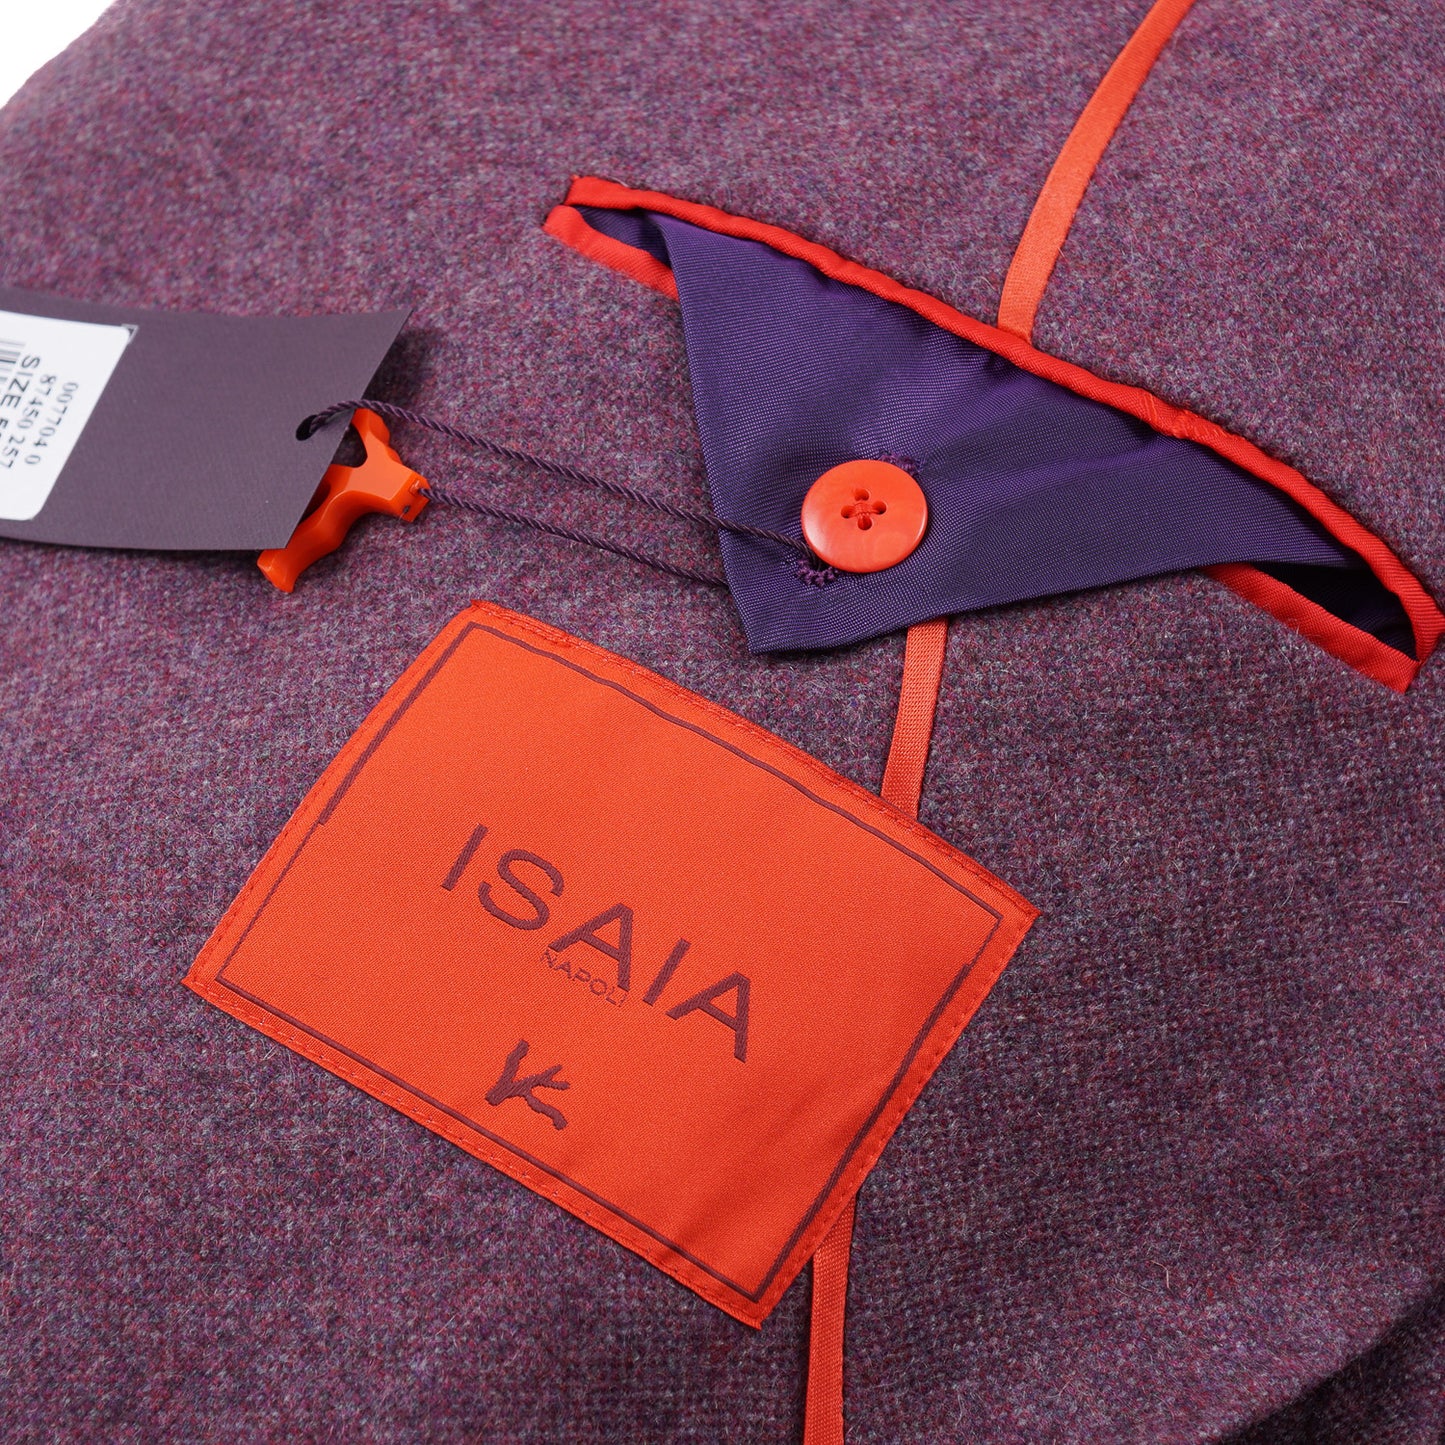 Isaia Deconstructed Cashmere Sport Coat - Top Shelf Apparel